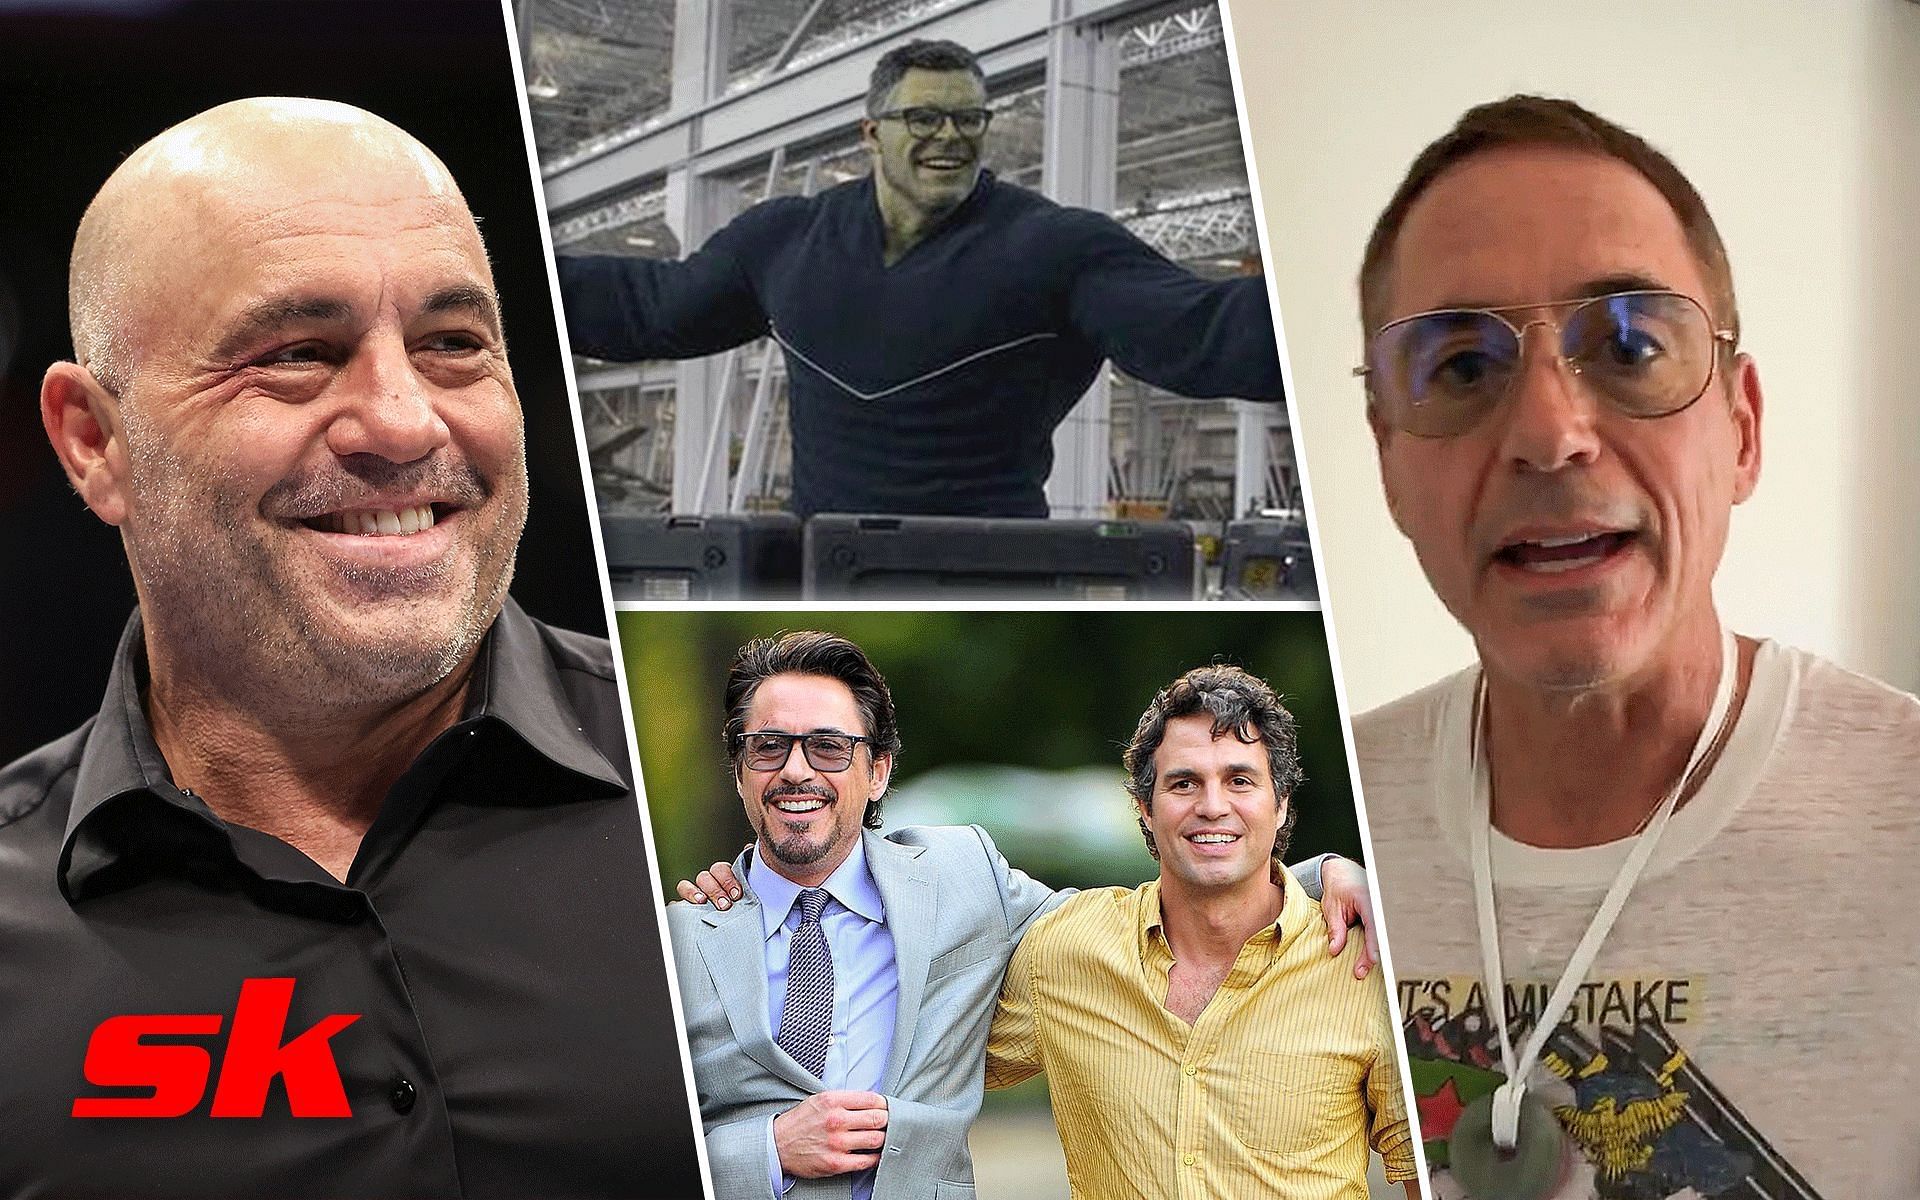 Joe Rogan (Left), The Hulk, Mark Ruffalo and Robert Downey Jr. (Middle), Robert Downey Jr. (Right) [Image courtesy: Getty, @markruffalo and @robertdowneyjr on Instagram]